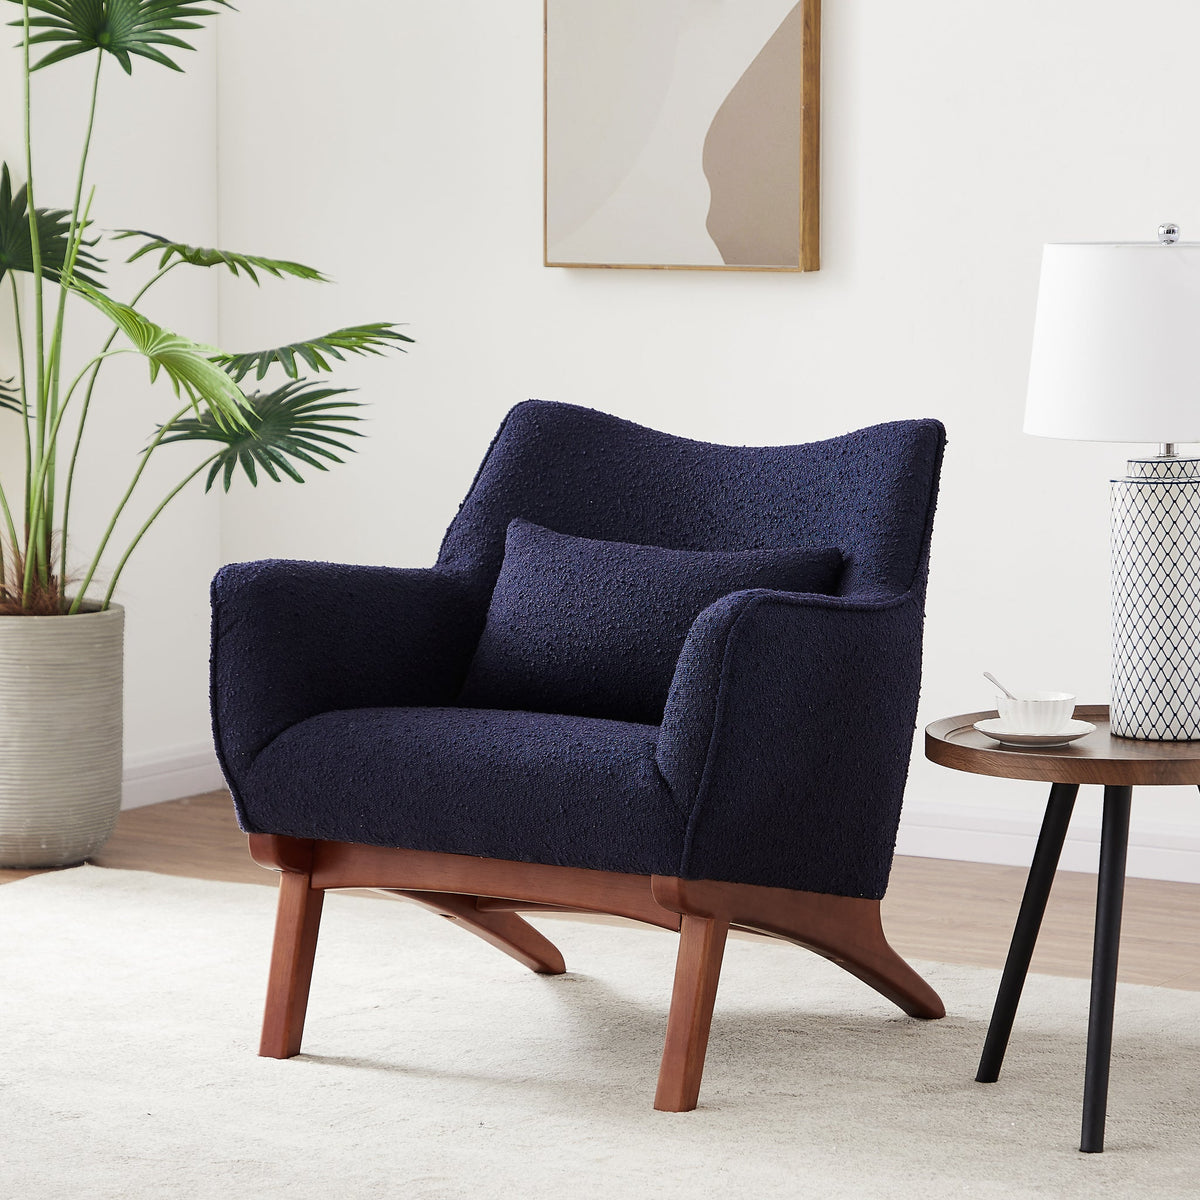 Casper Lounge Chair - Blue Boucle | MidinMod | Houston TX | Best Furniture stores in Houston